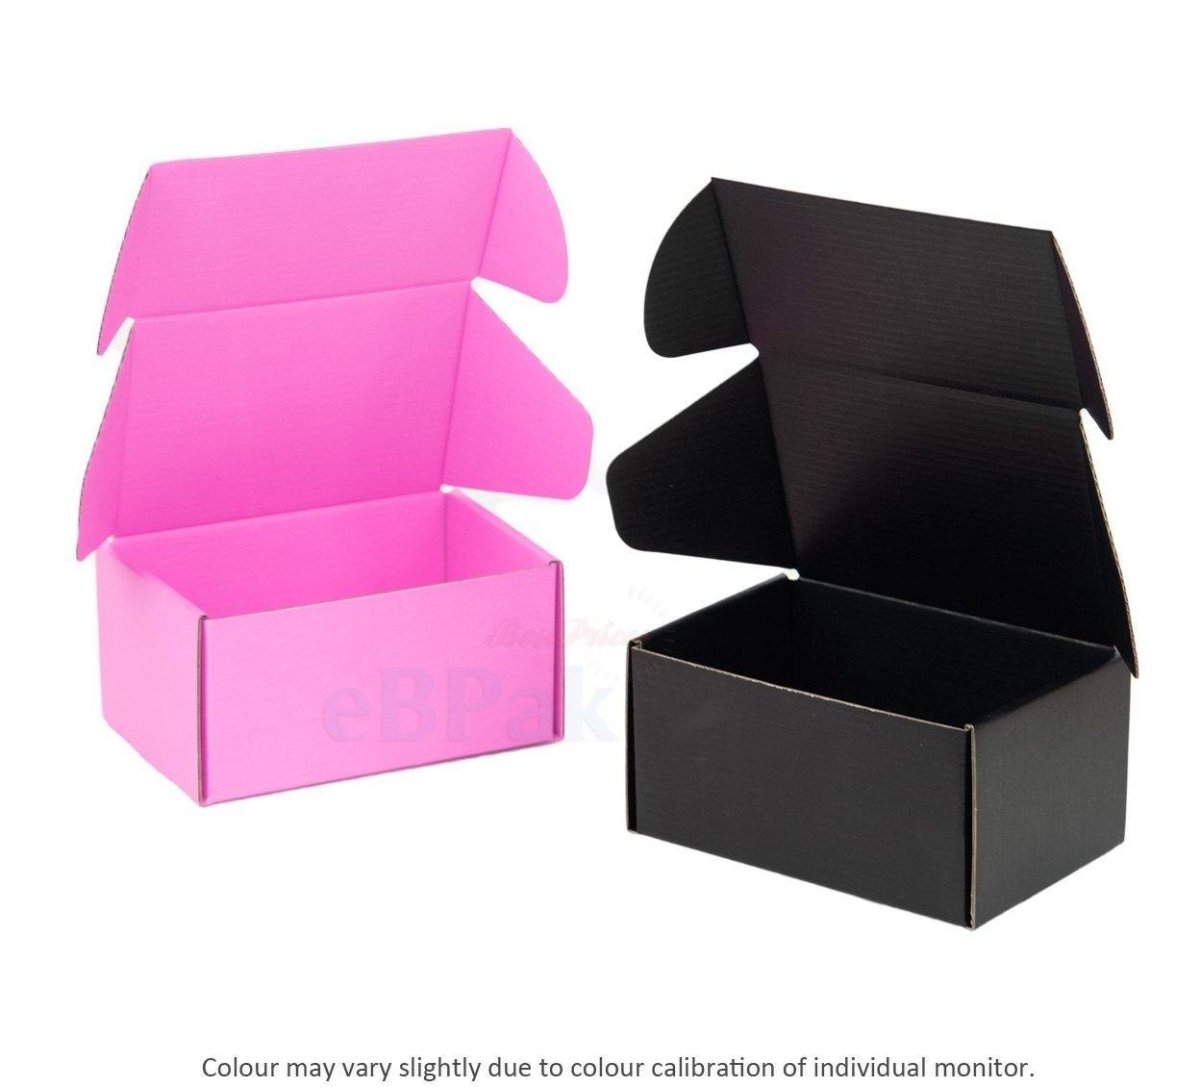 BoxMore Premium Full Hot Pink Colour 150 x 100 x 75mm B258